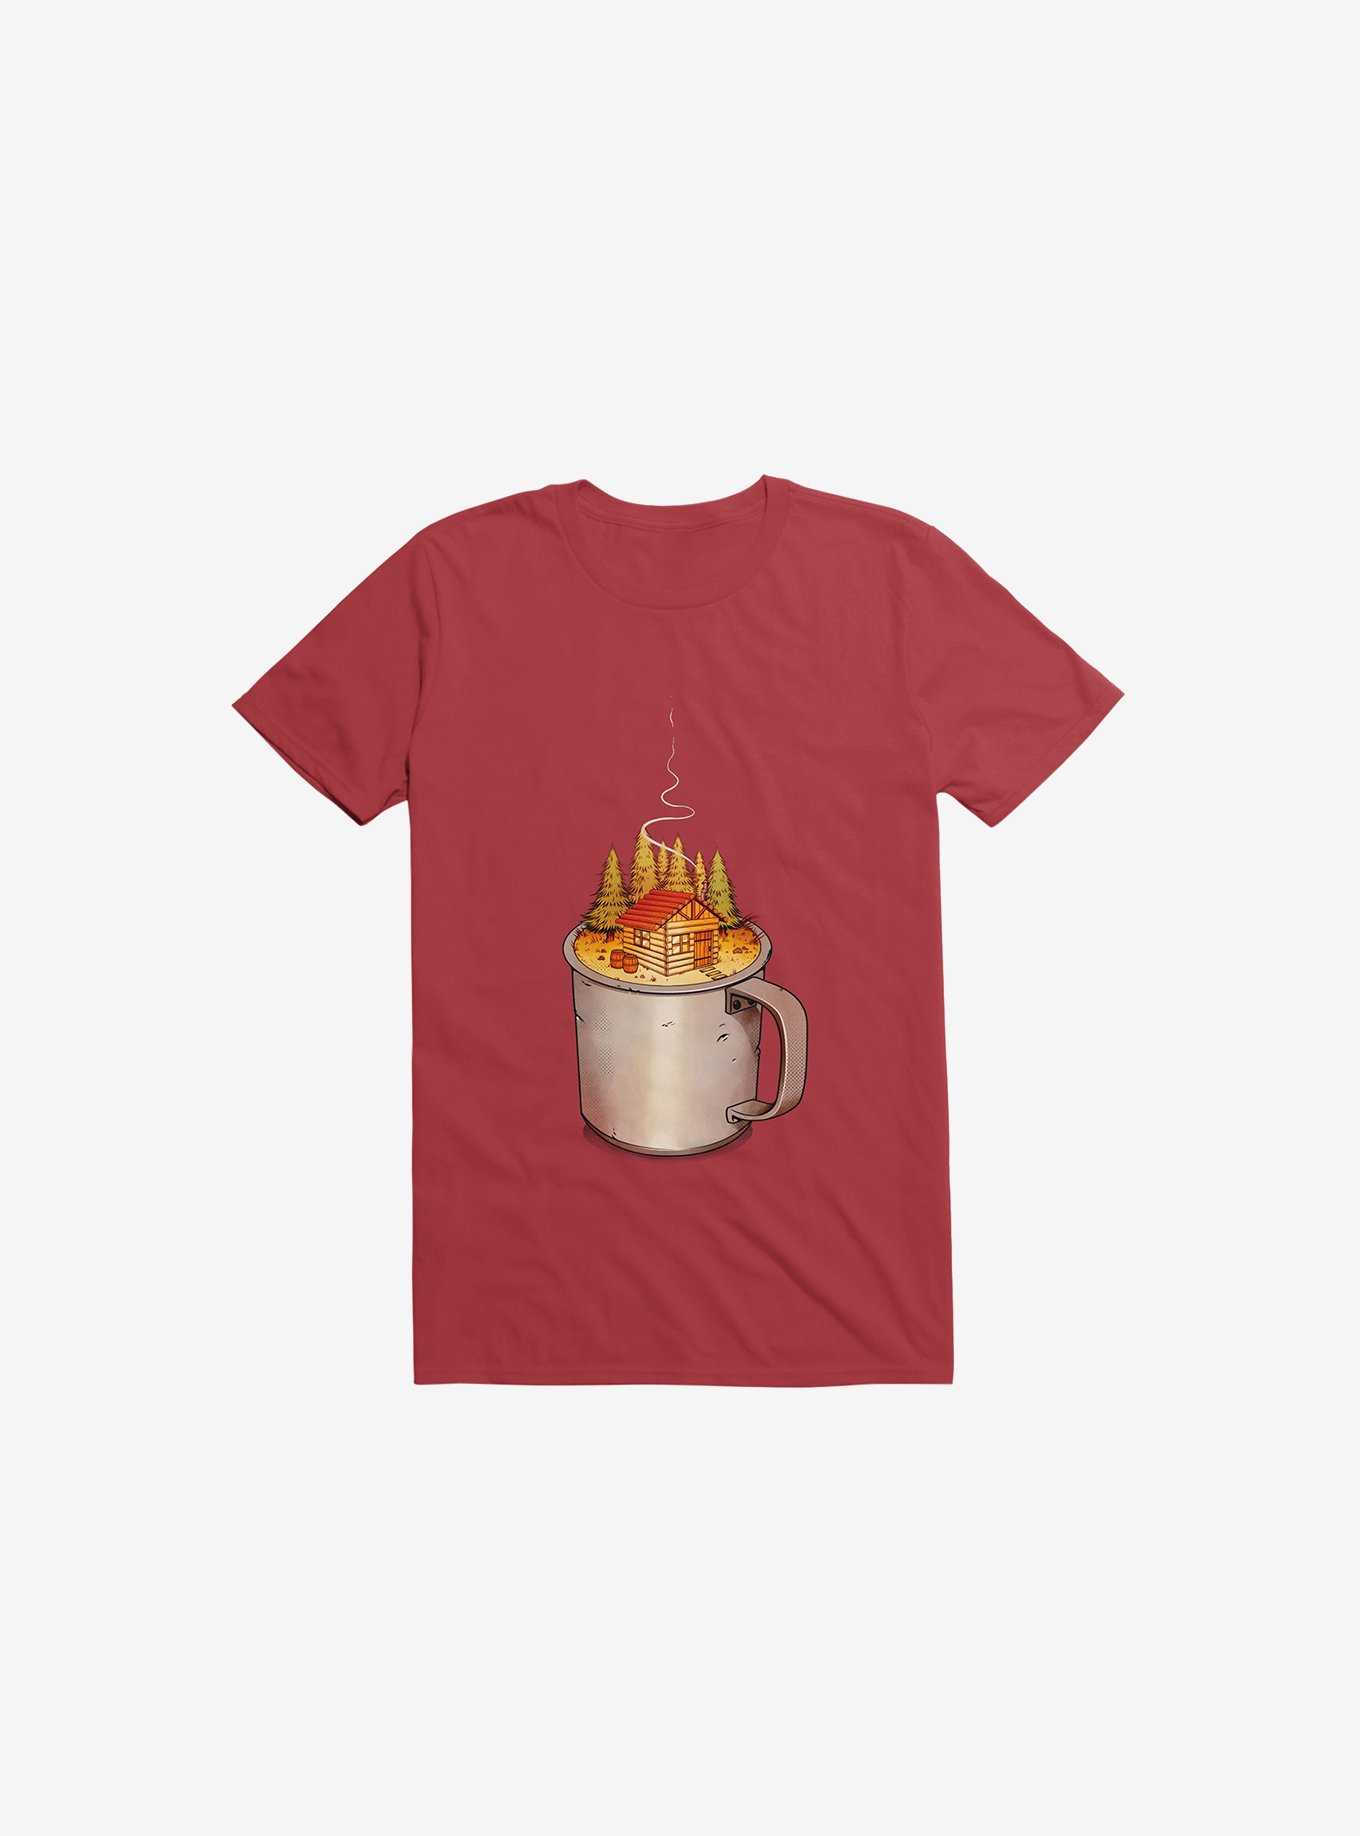 My Camp Of Tea Red T-Shirt, , hi-res